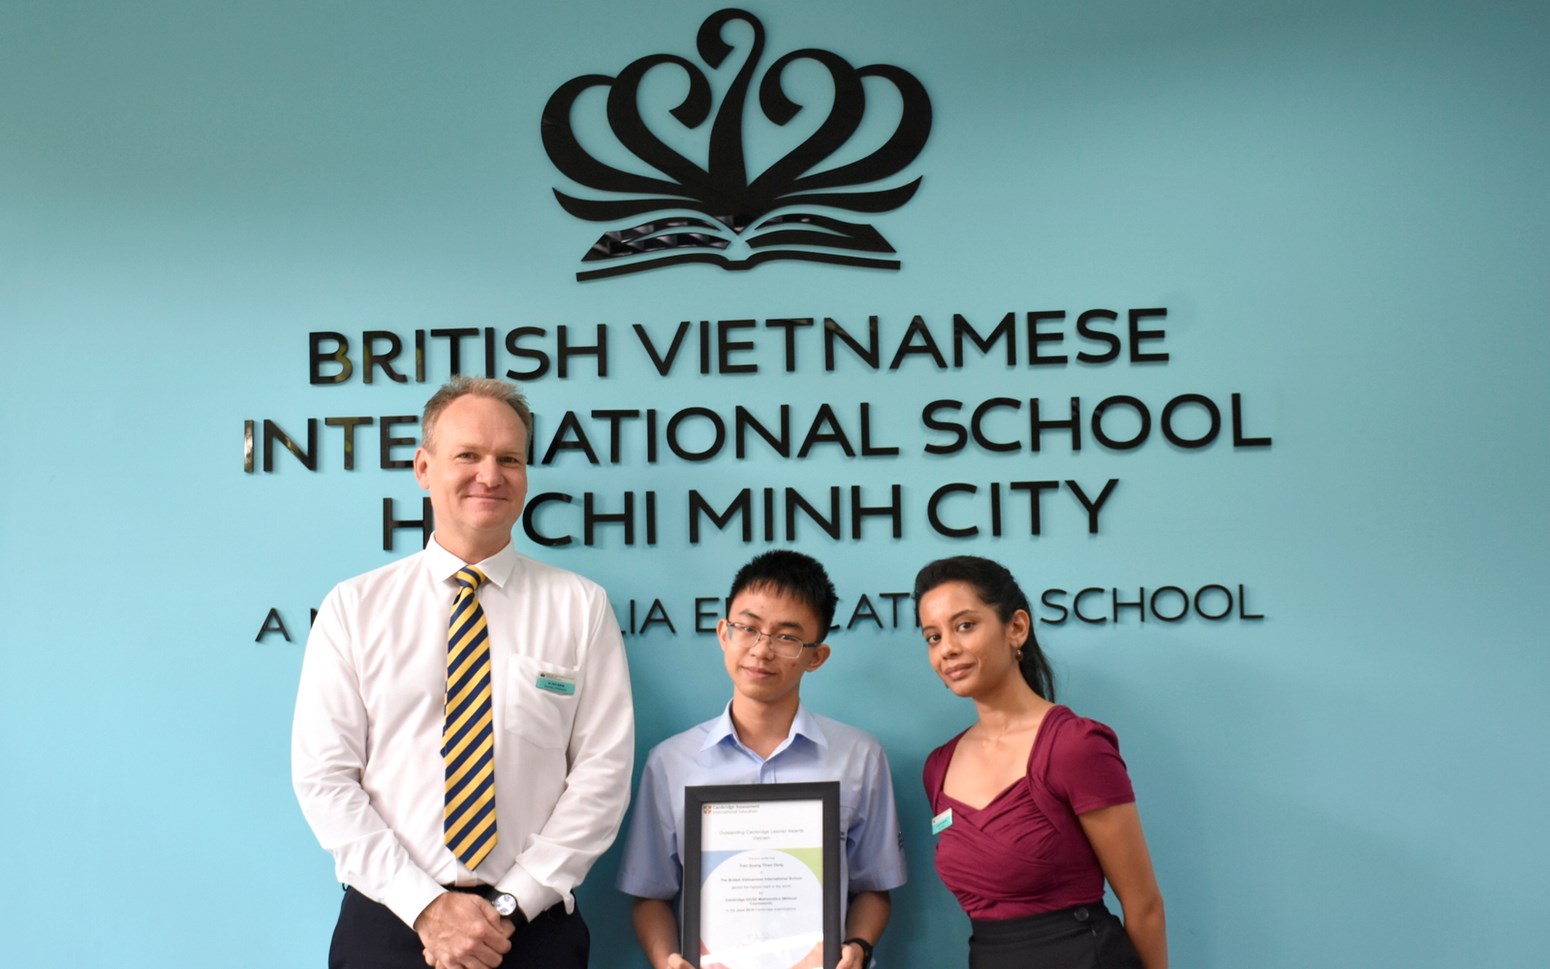 Thien Dang Success Story | BVIS HCMC  - Thien Dang University Offer